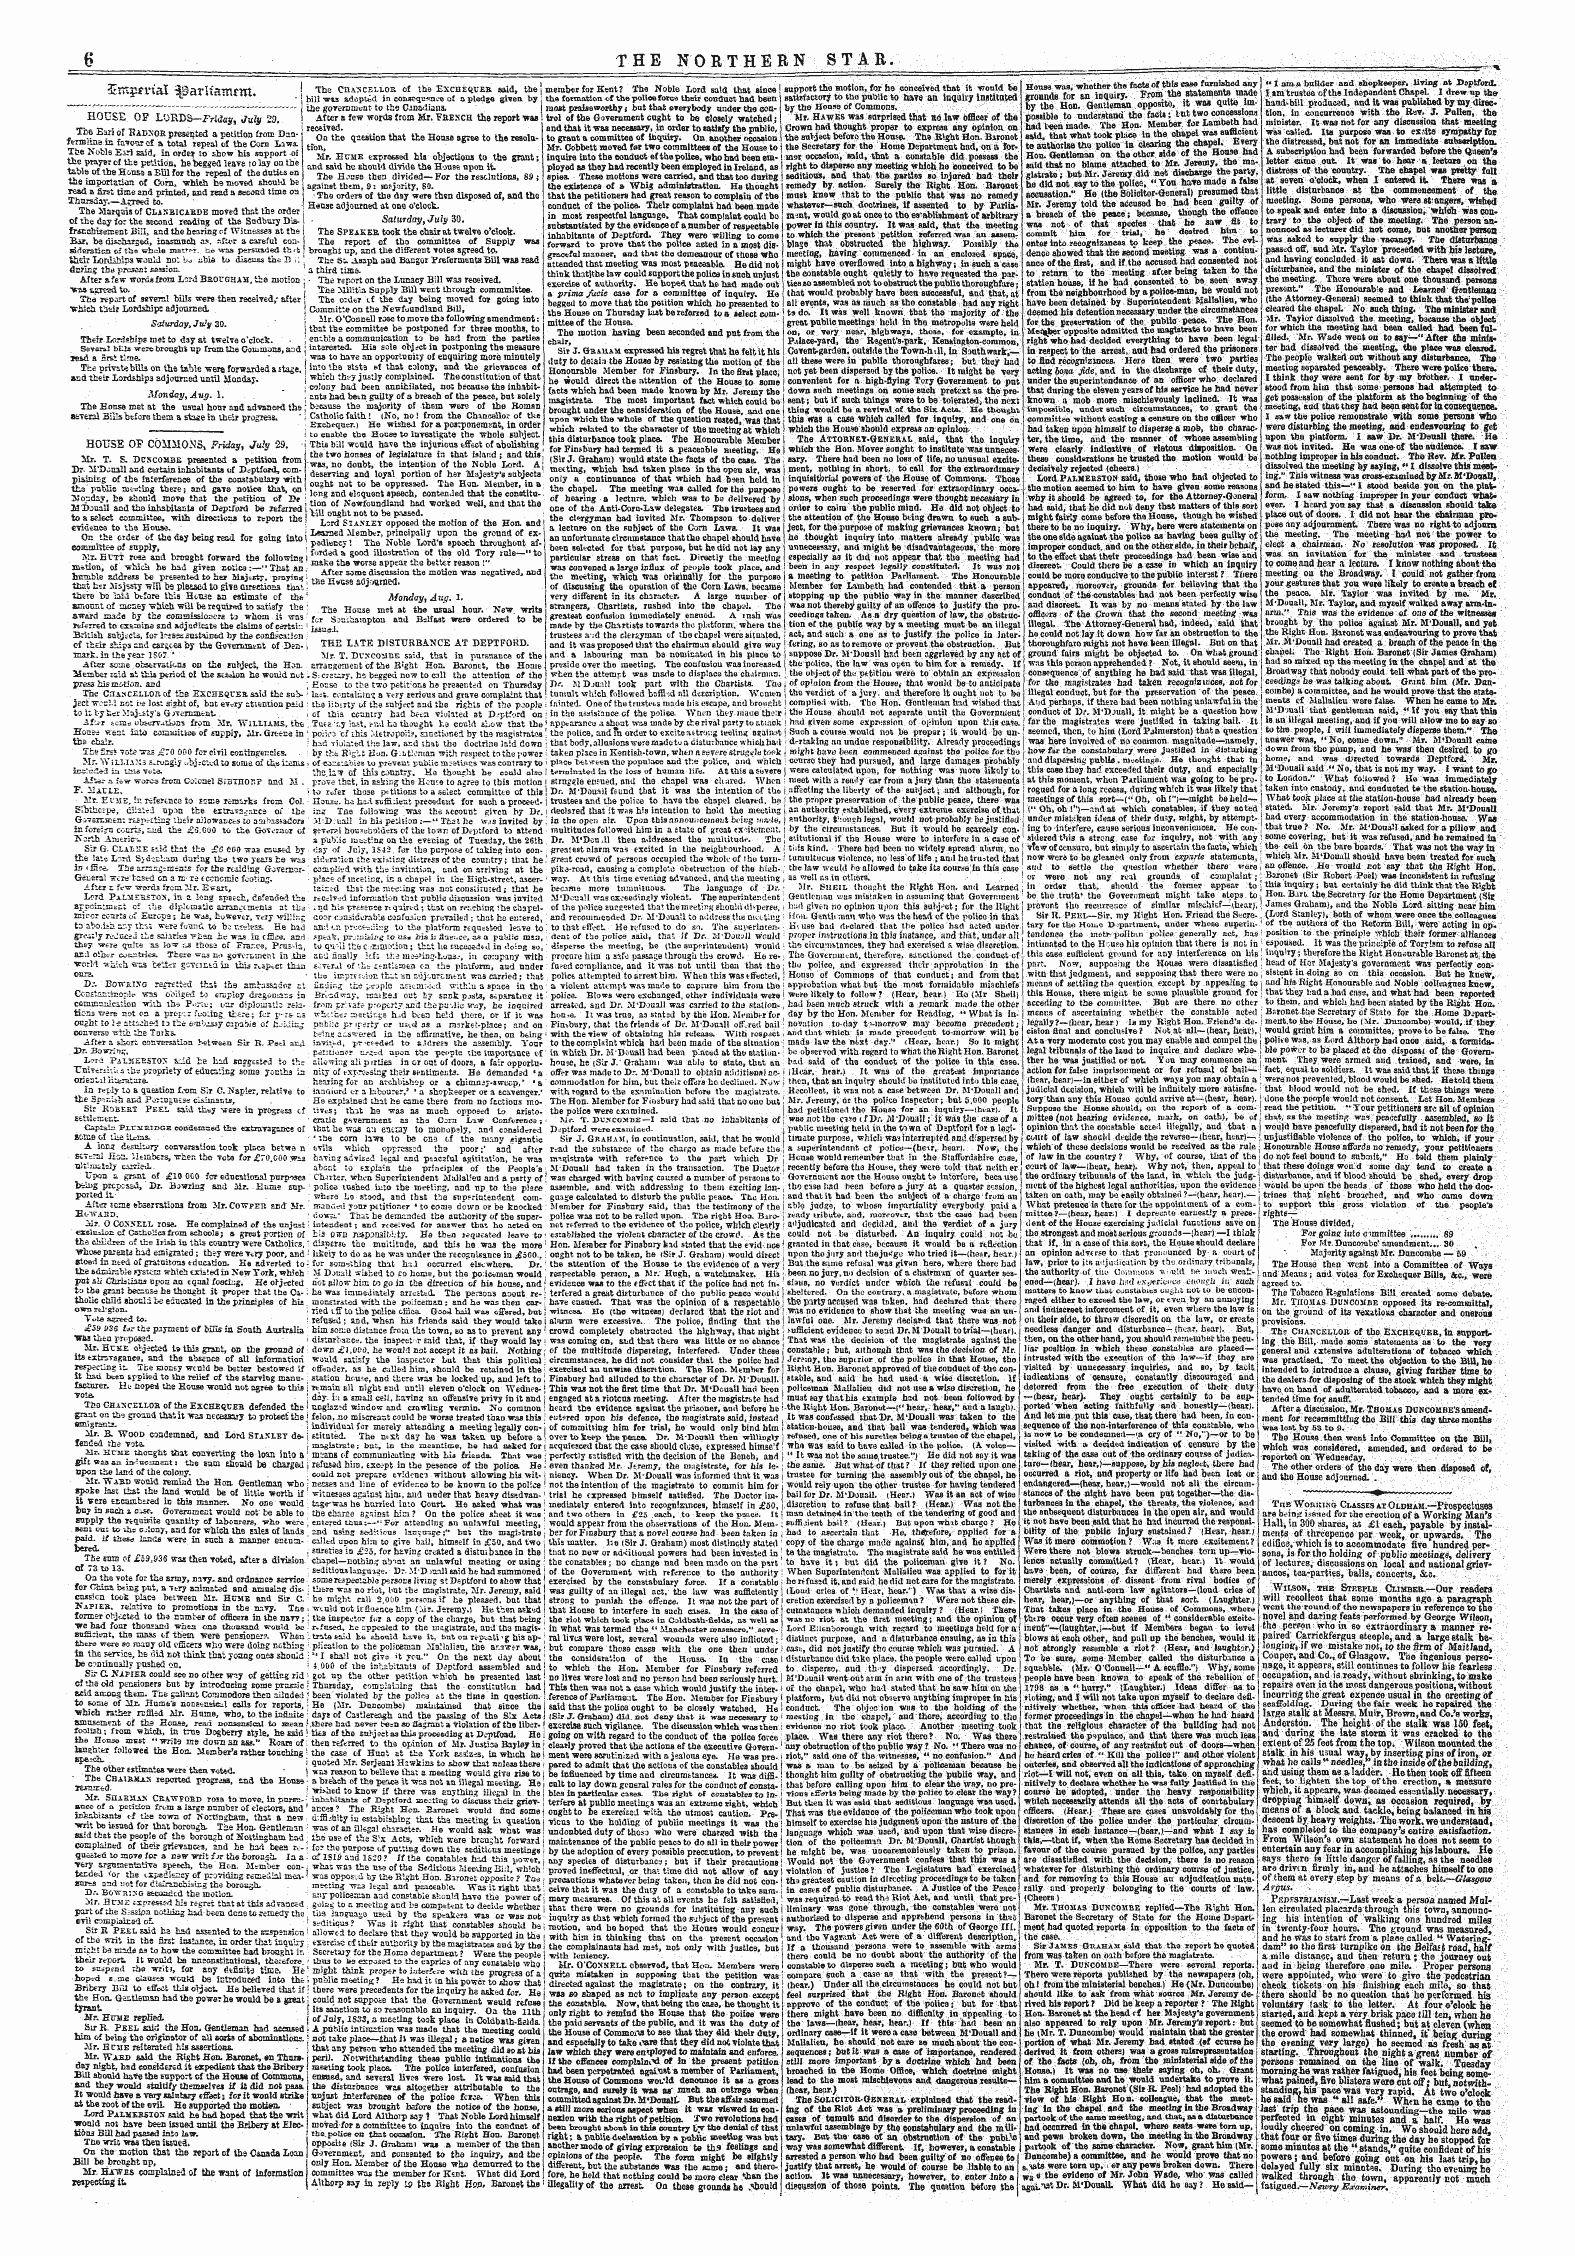 Northern Star (1837-1852): jS F Y, 2nd edition - Impfnal -^Iarifamfm.